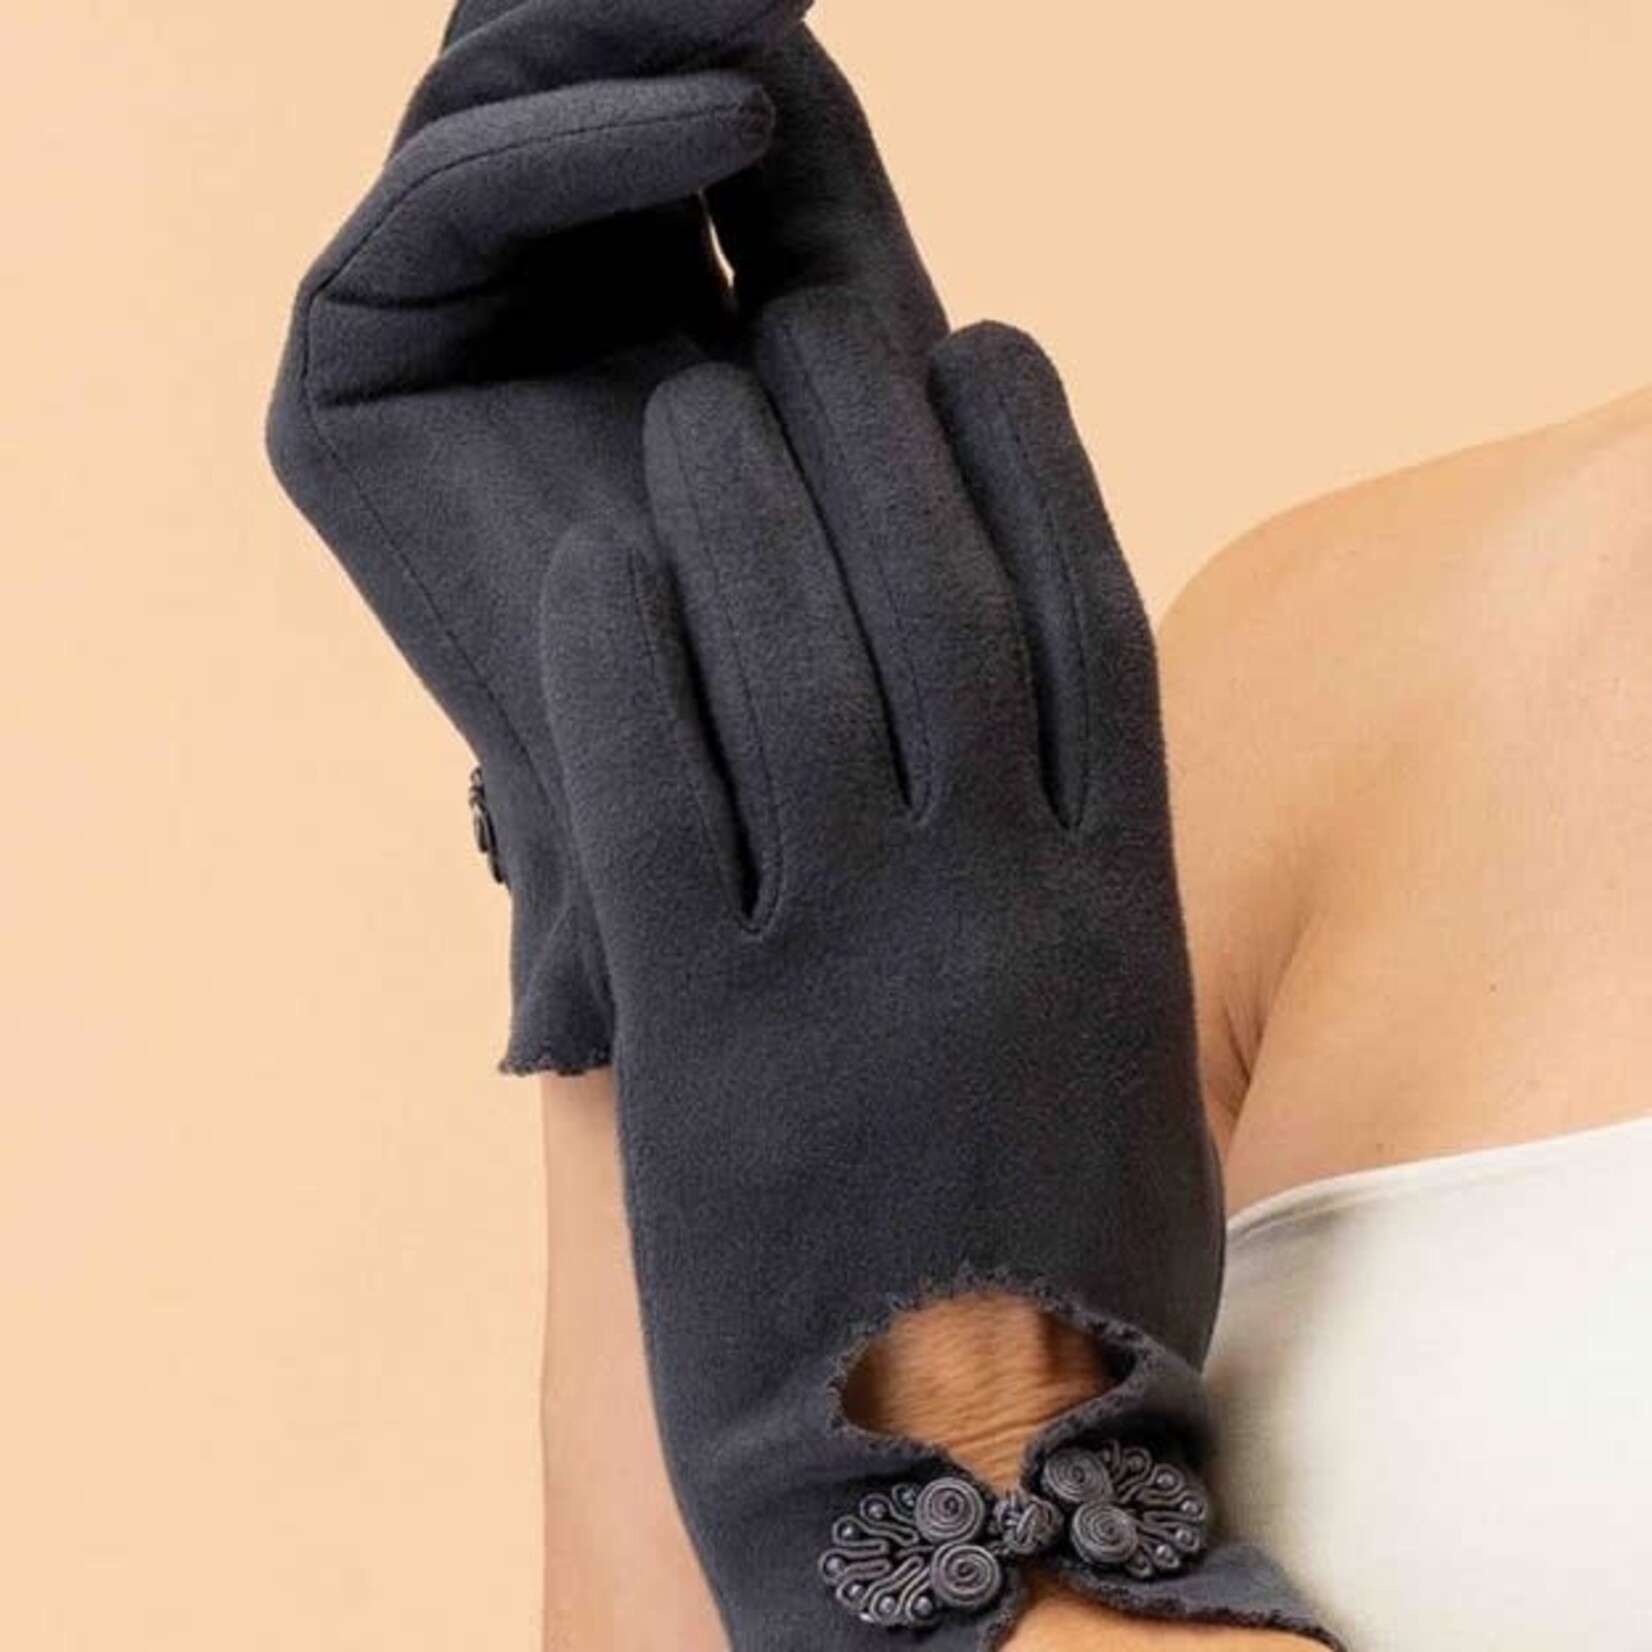 Powder Suki Gloves in Damson in Slate